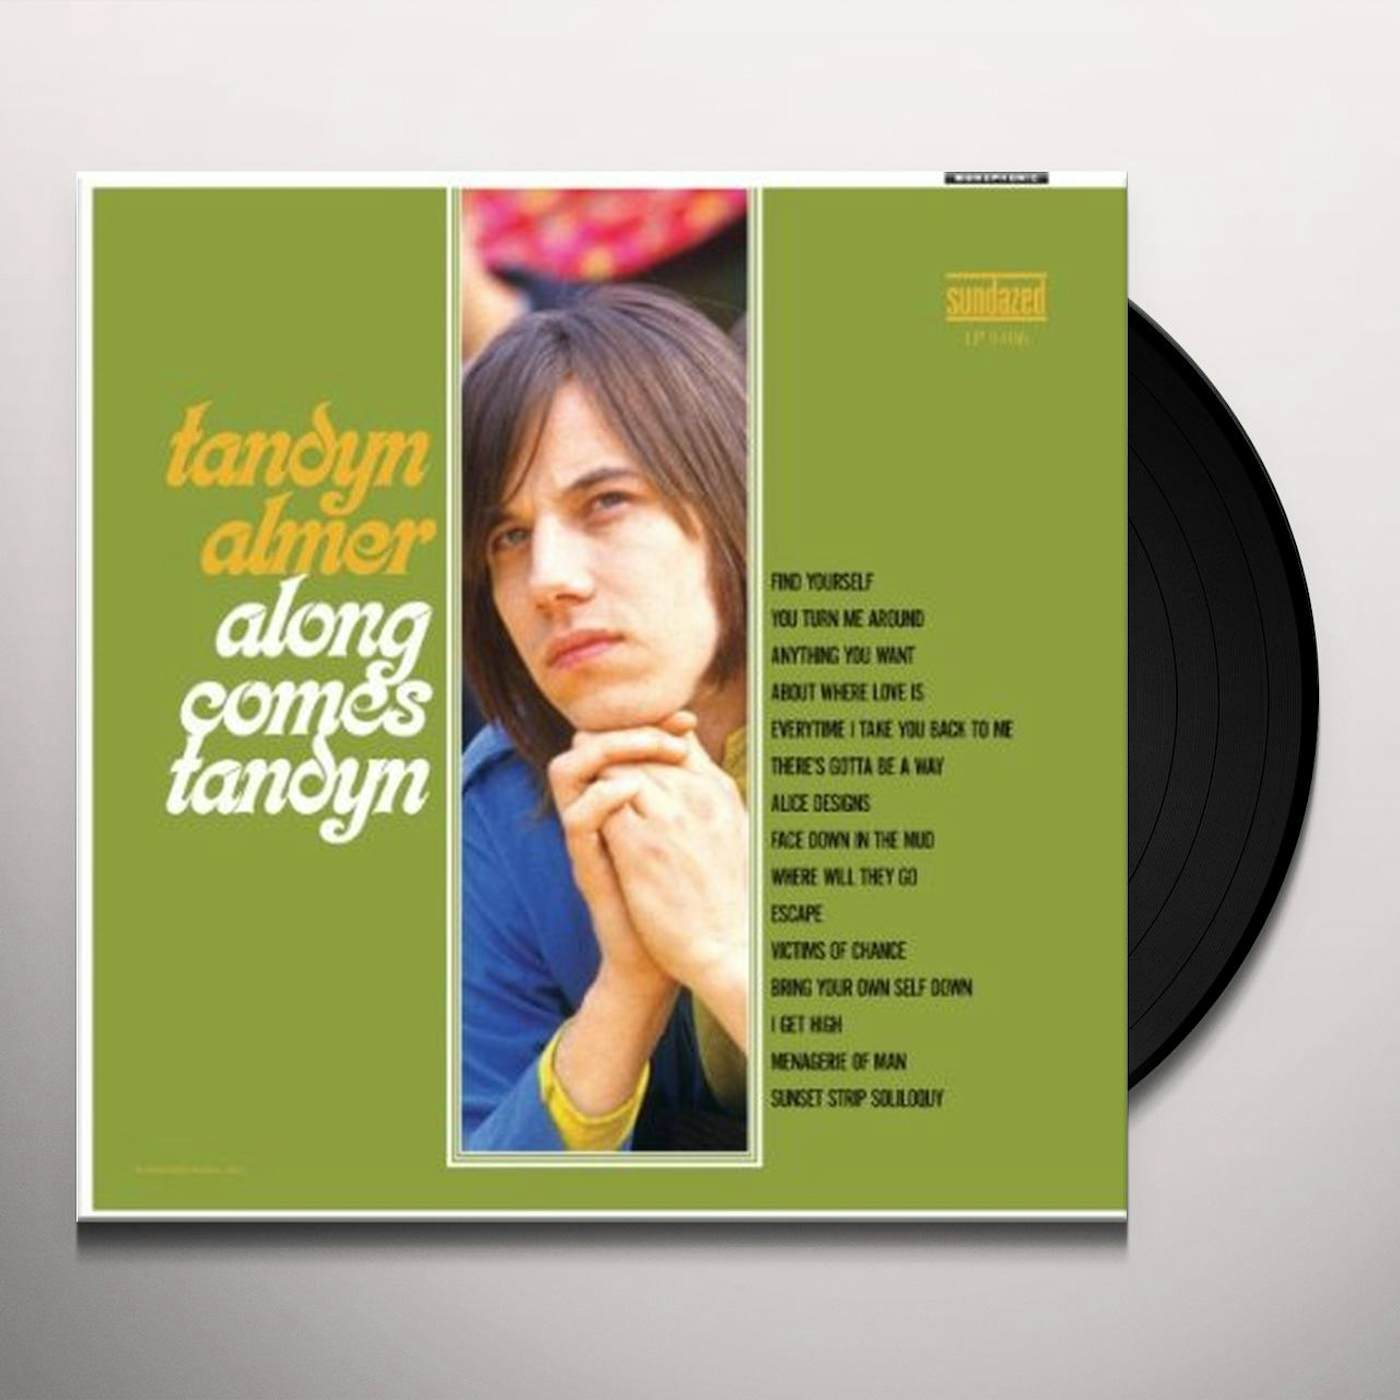 Tandyn Almer Along Comes Tandyn Vinyl Record